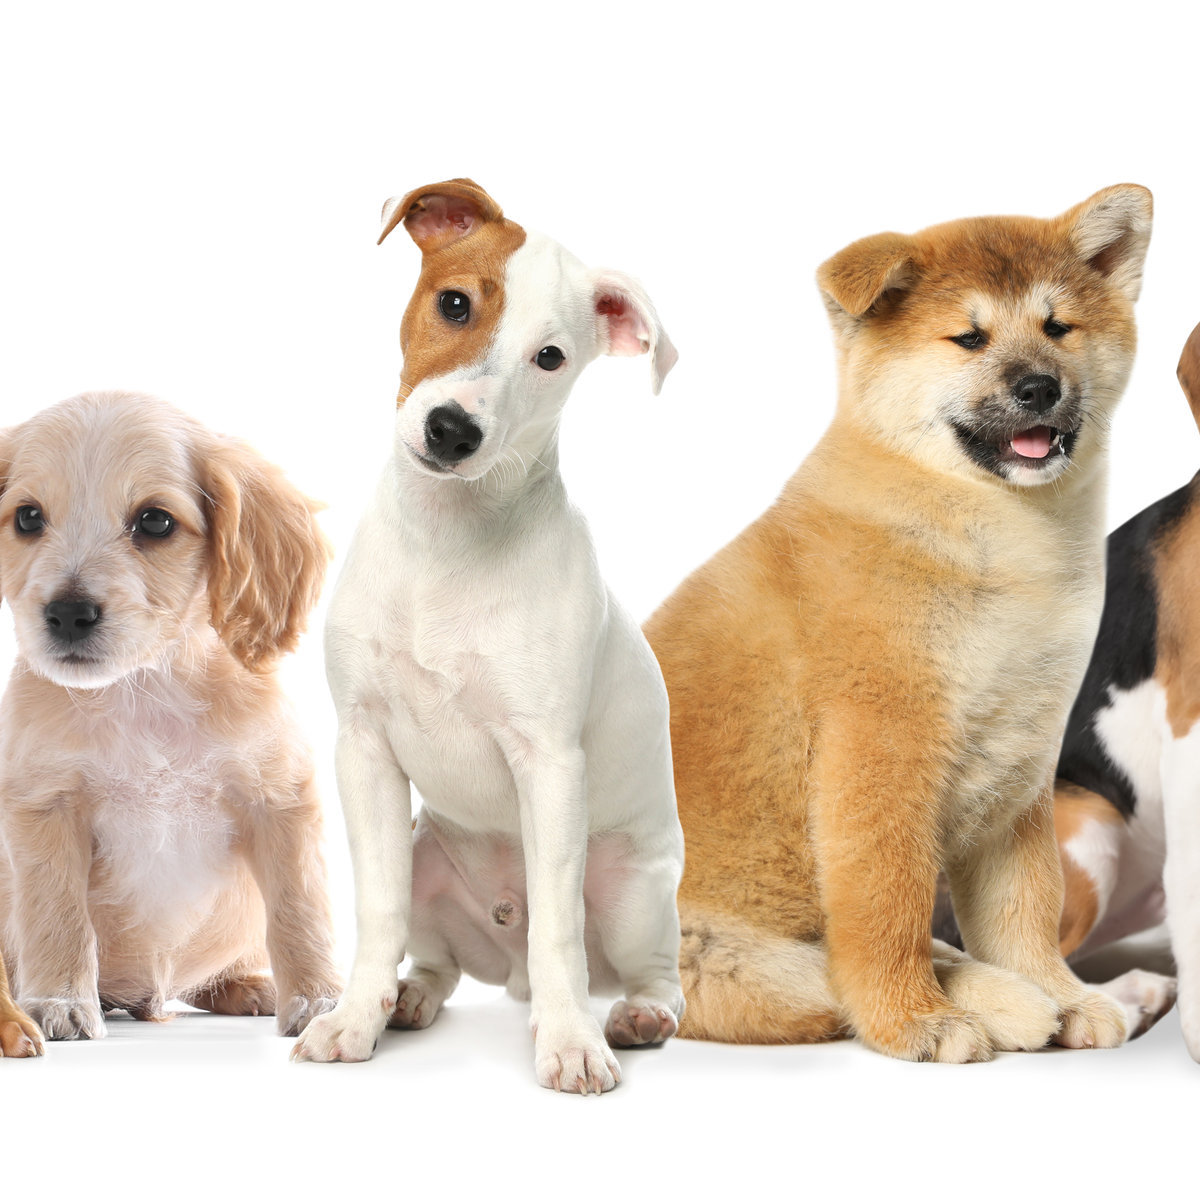 Seoul offers free pet dog education